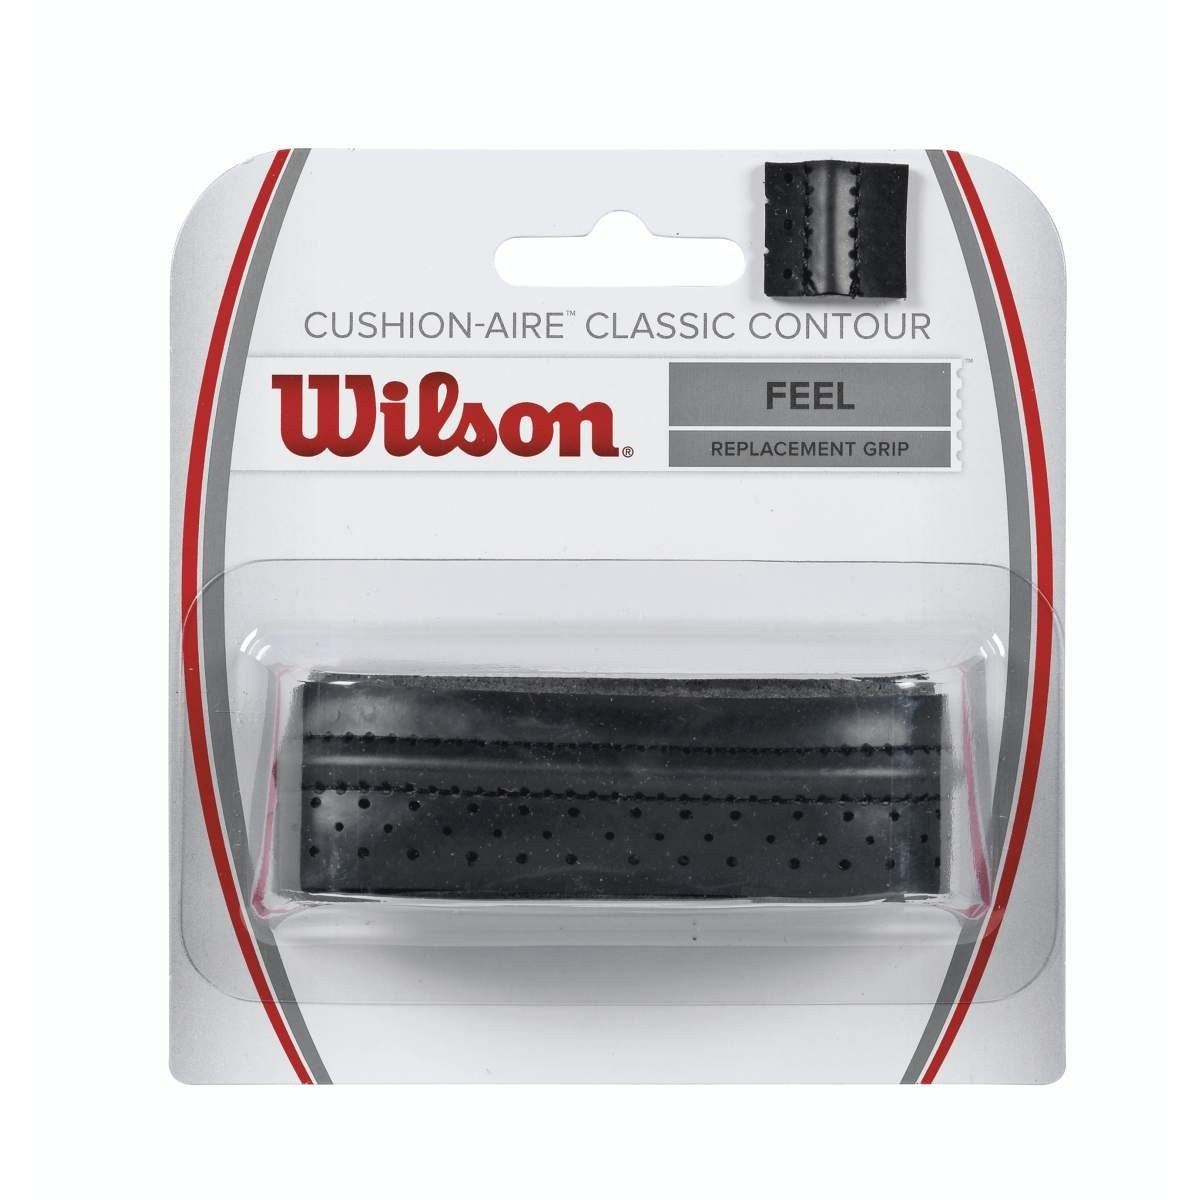 WILSON Cushion-Aire Classic Contour